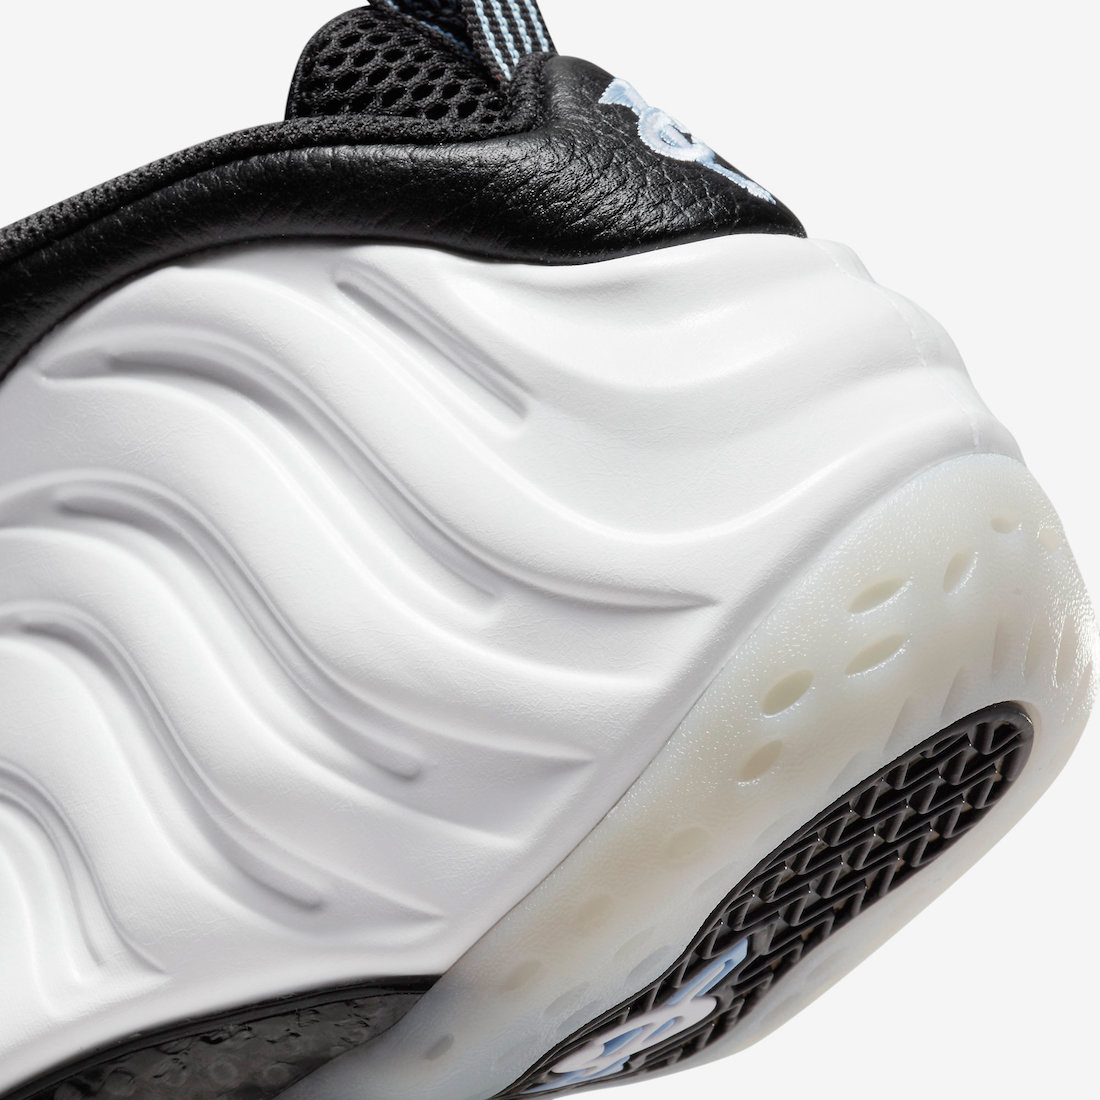 Nike-Air-Foamposite-One-Penny-PE-White-Black-Release-Date-8